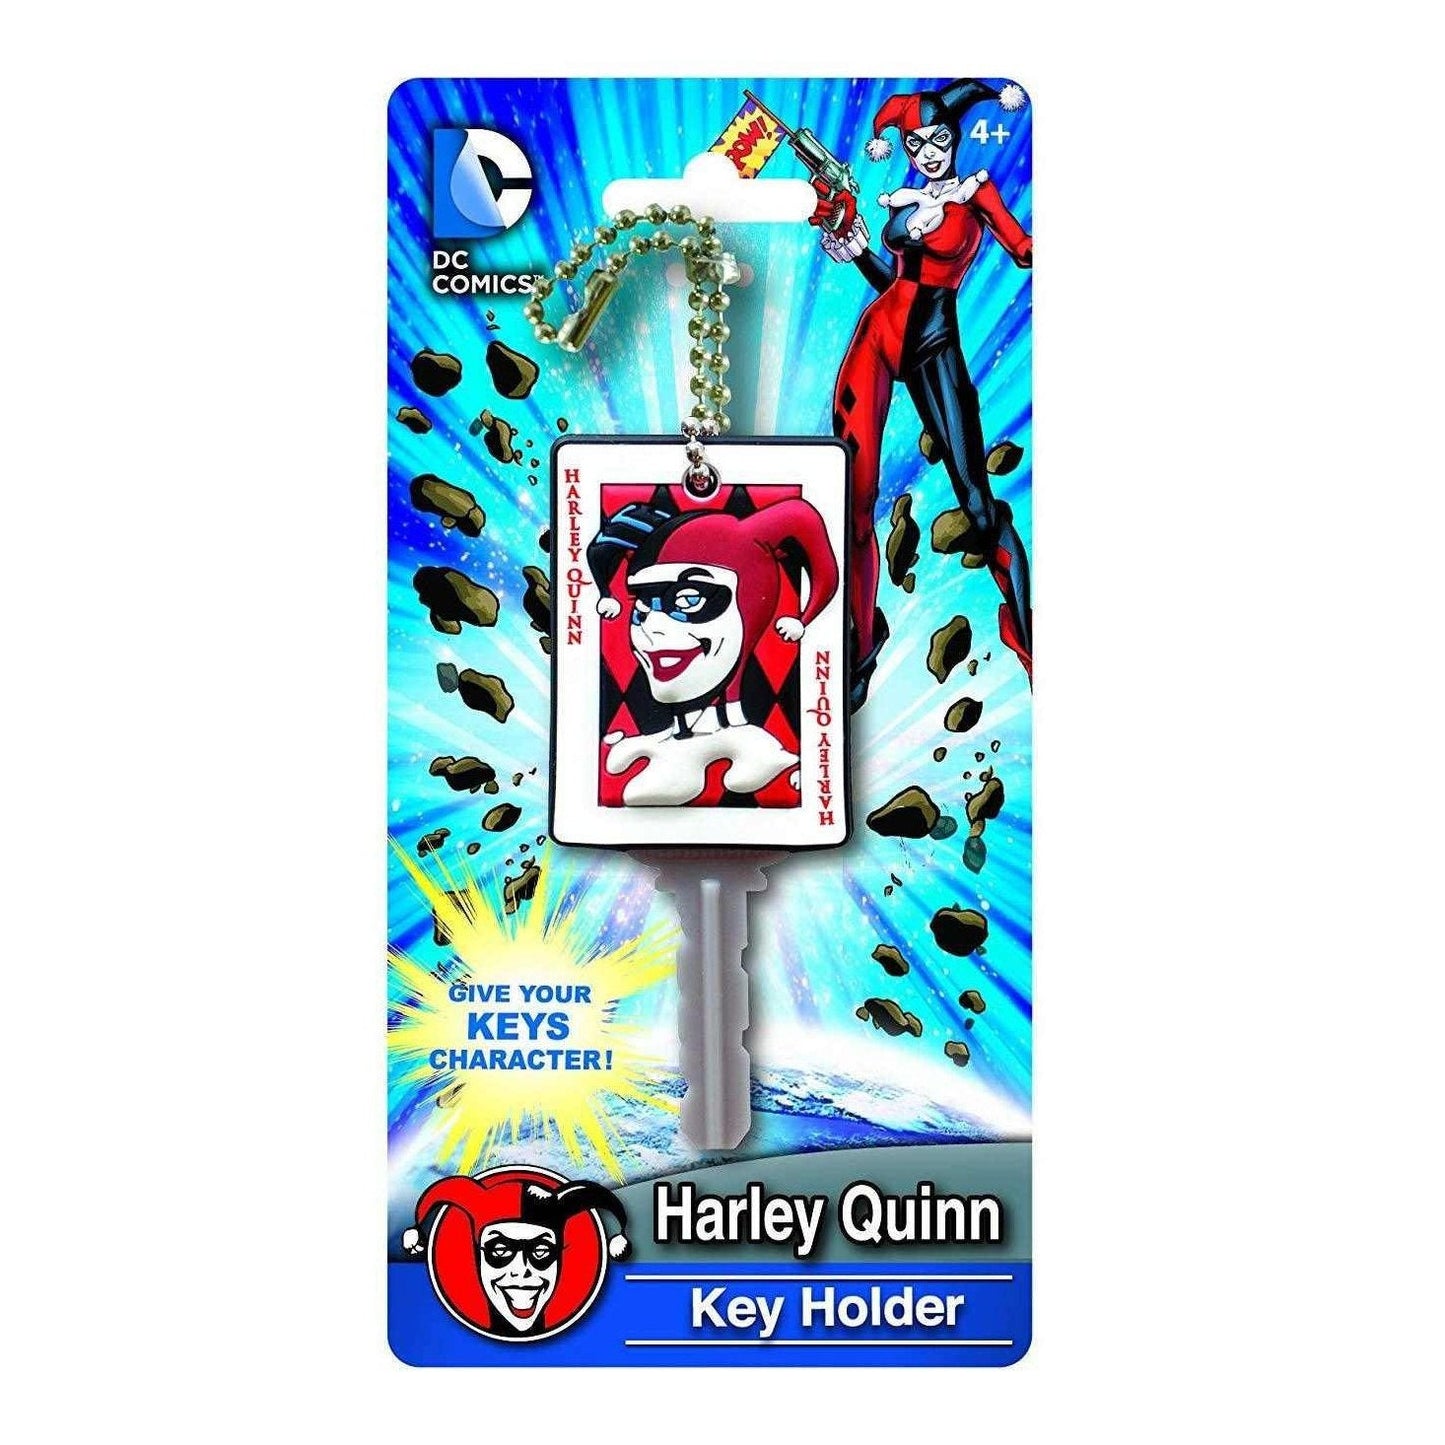 HARLEY QUINN - KEY HOLDER toysmaster